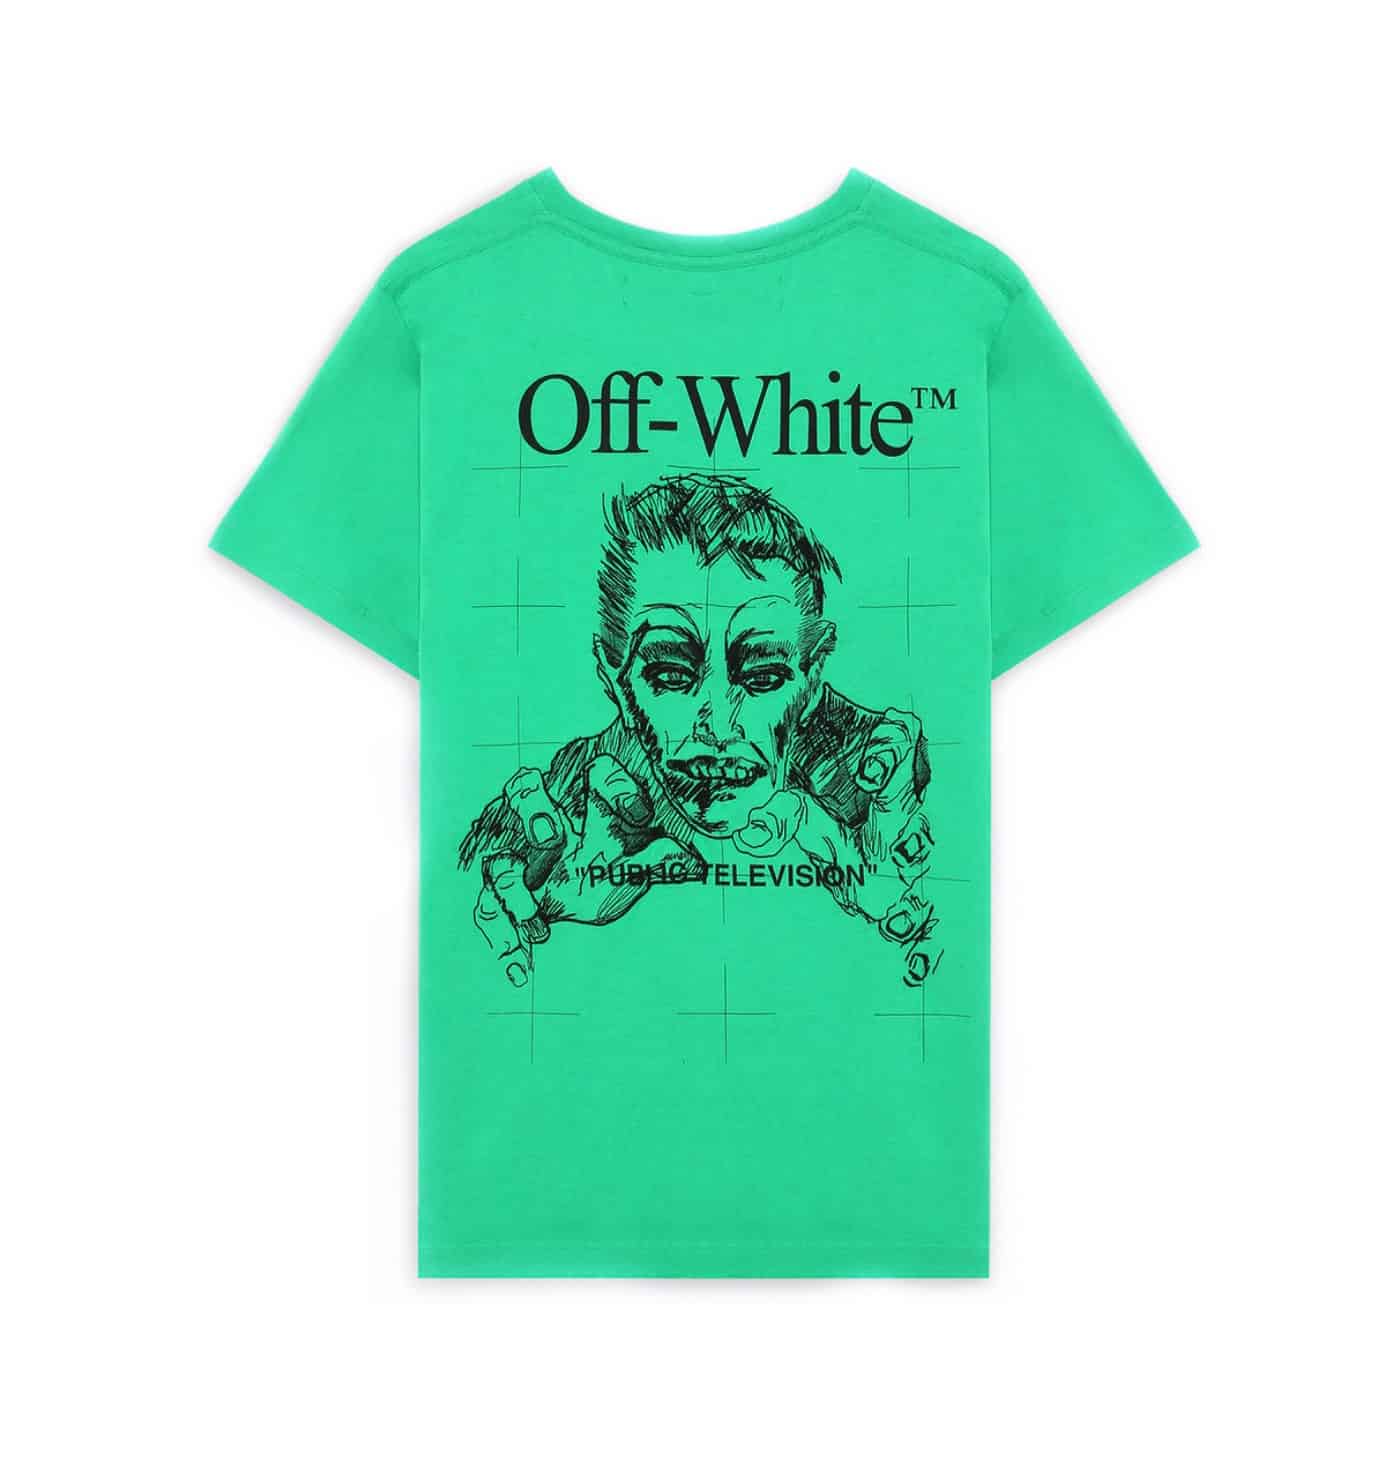 Off-White Public Television T-Shirt Green/Black